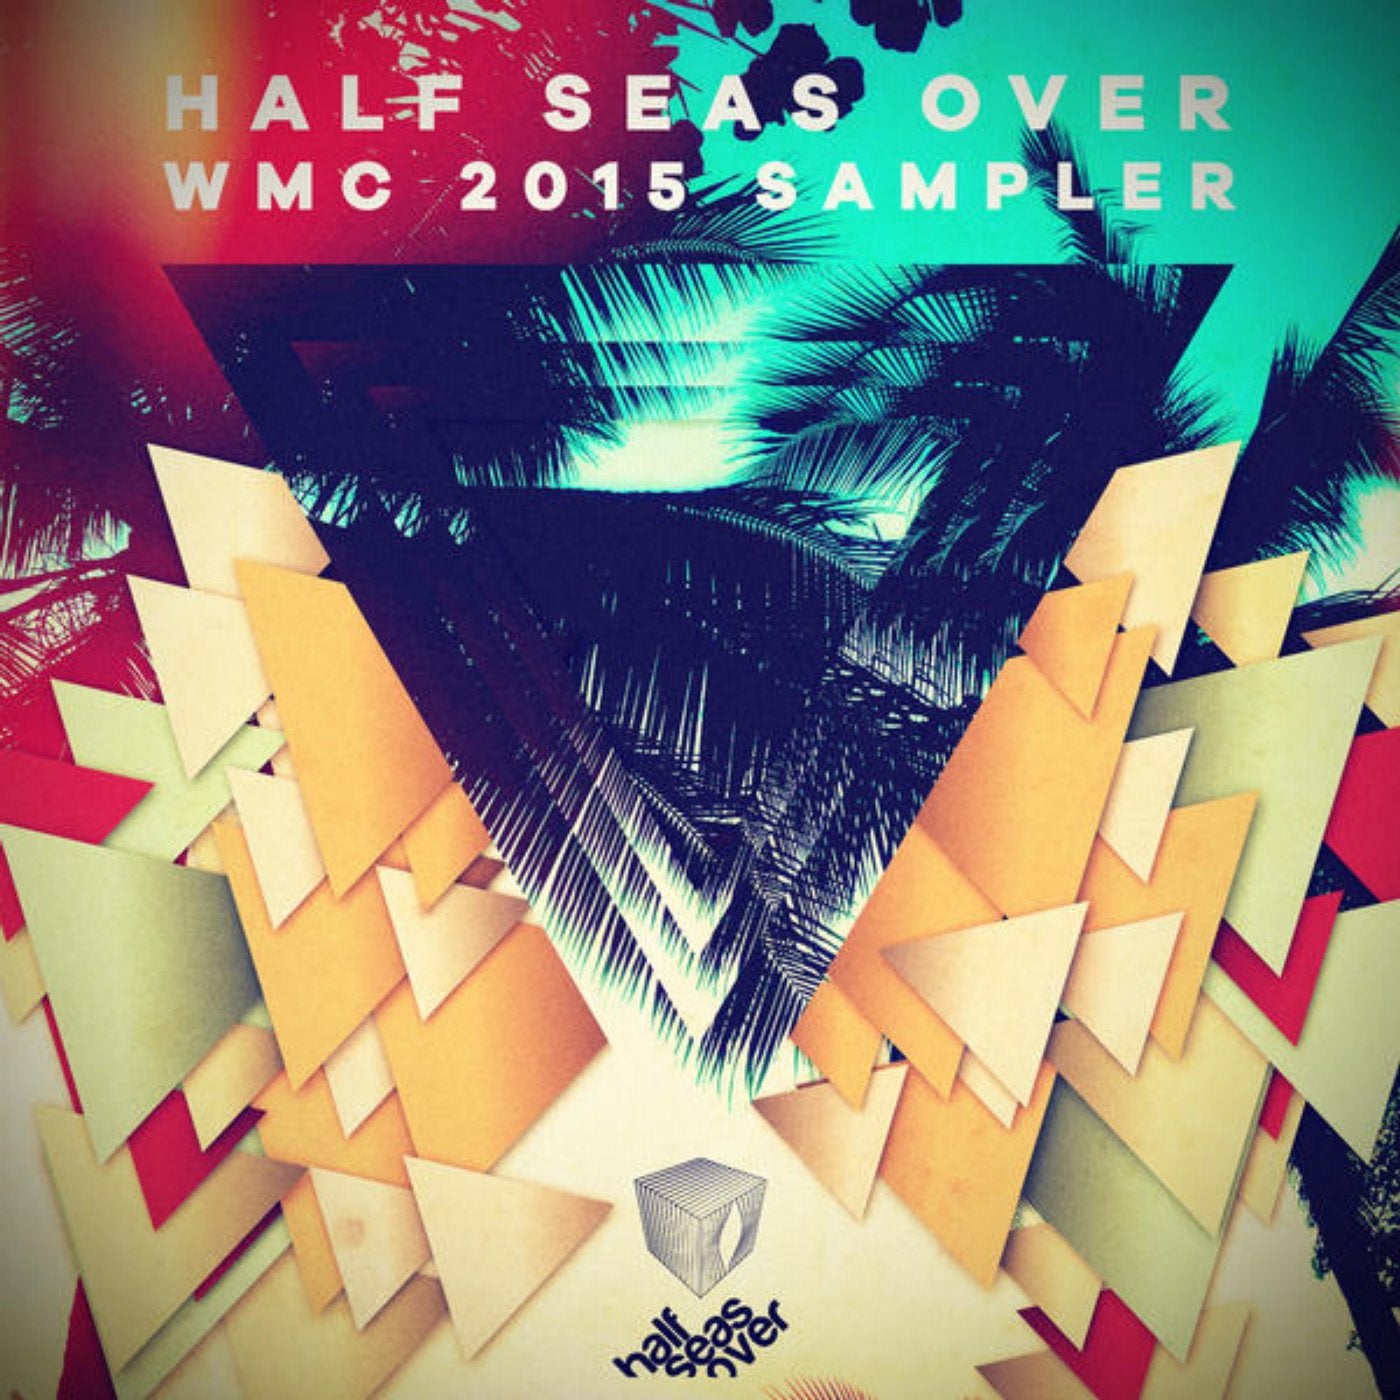 Half Seas Over Sampler - WMC 2015